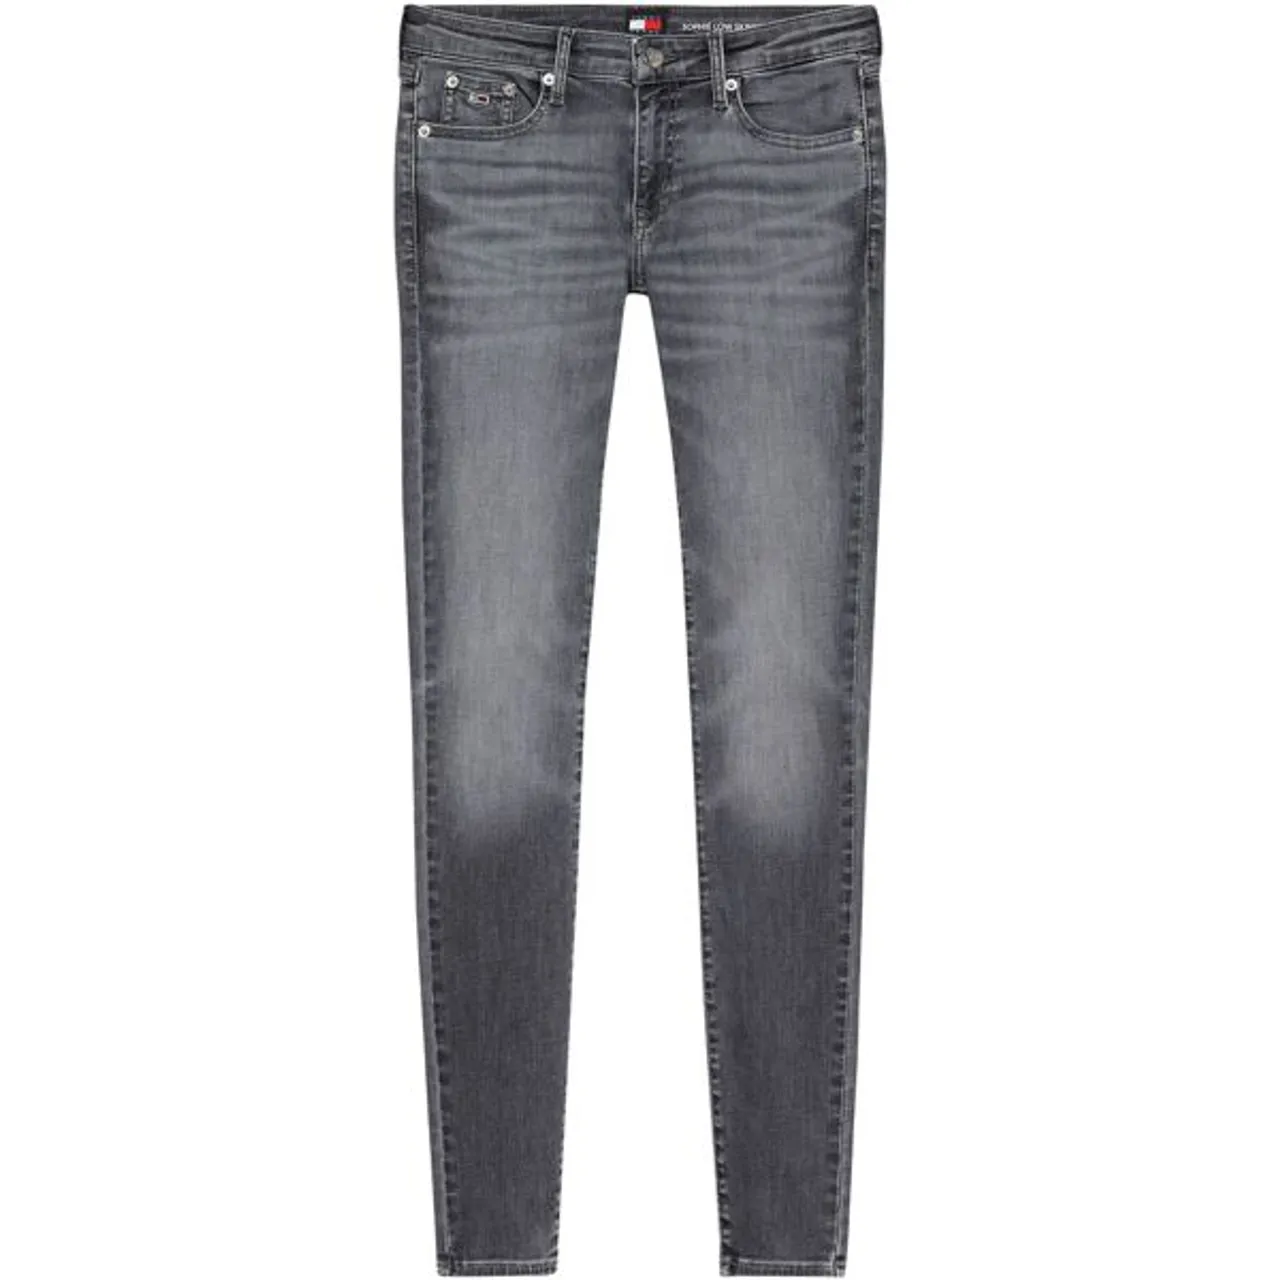 Slim-fit-Jeans TOMMY JEANS "Skinny Jeans Marken Low Waist Mittlere Leibhöhe" Gr. 32, Länge 32, schwarz (black2) Damen Jeans Röhrenjeans